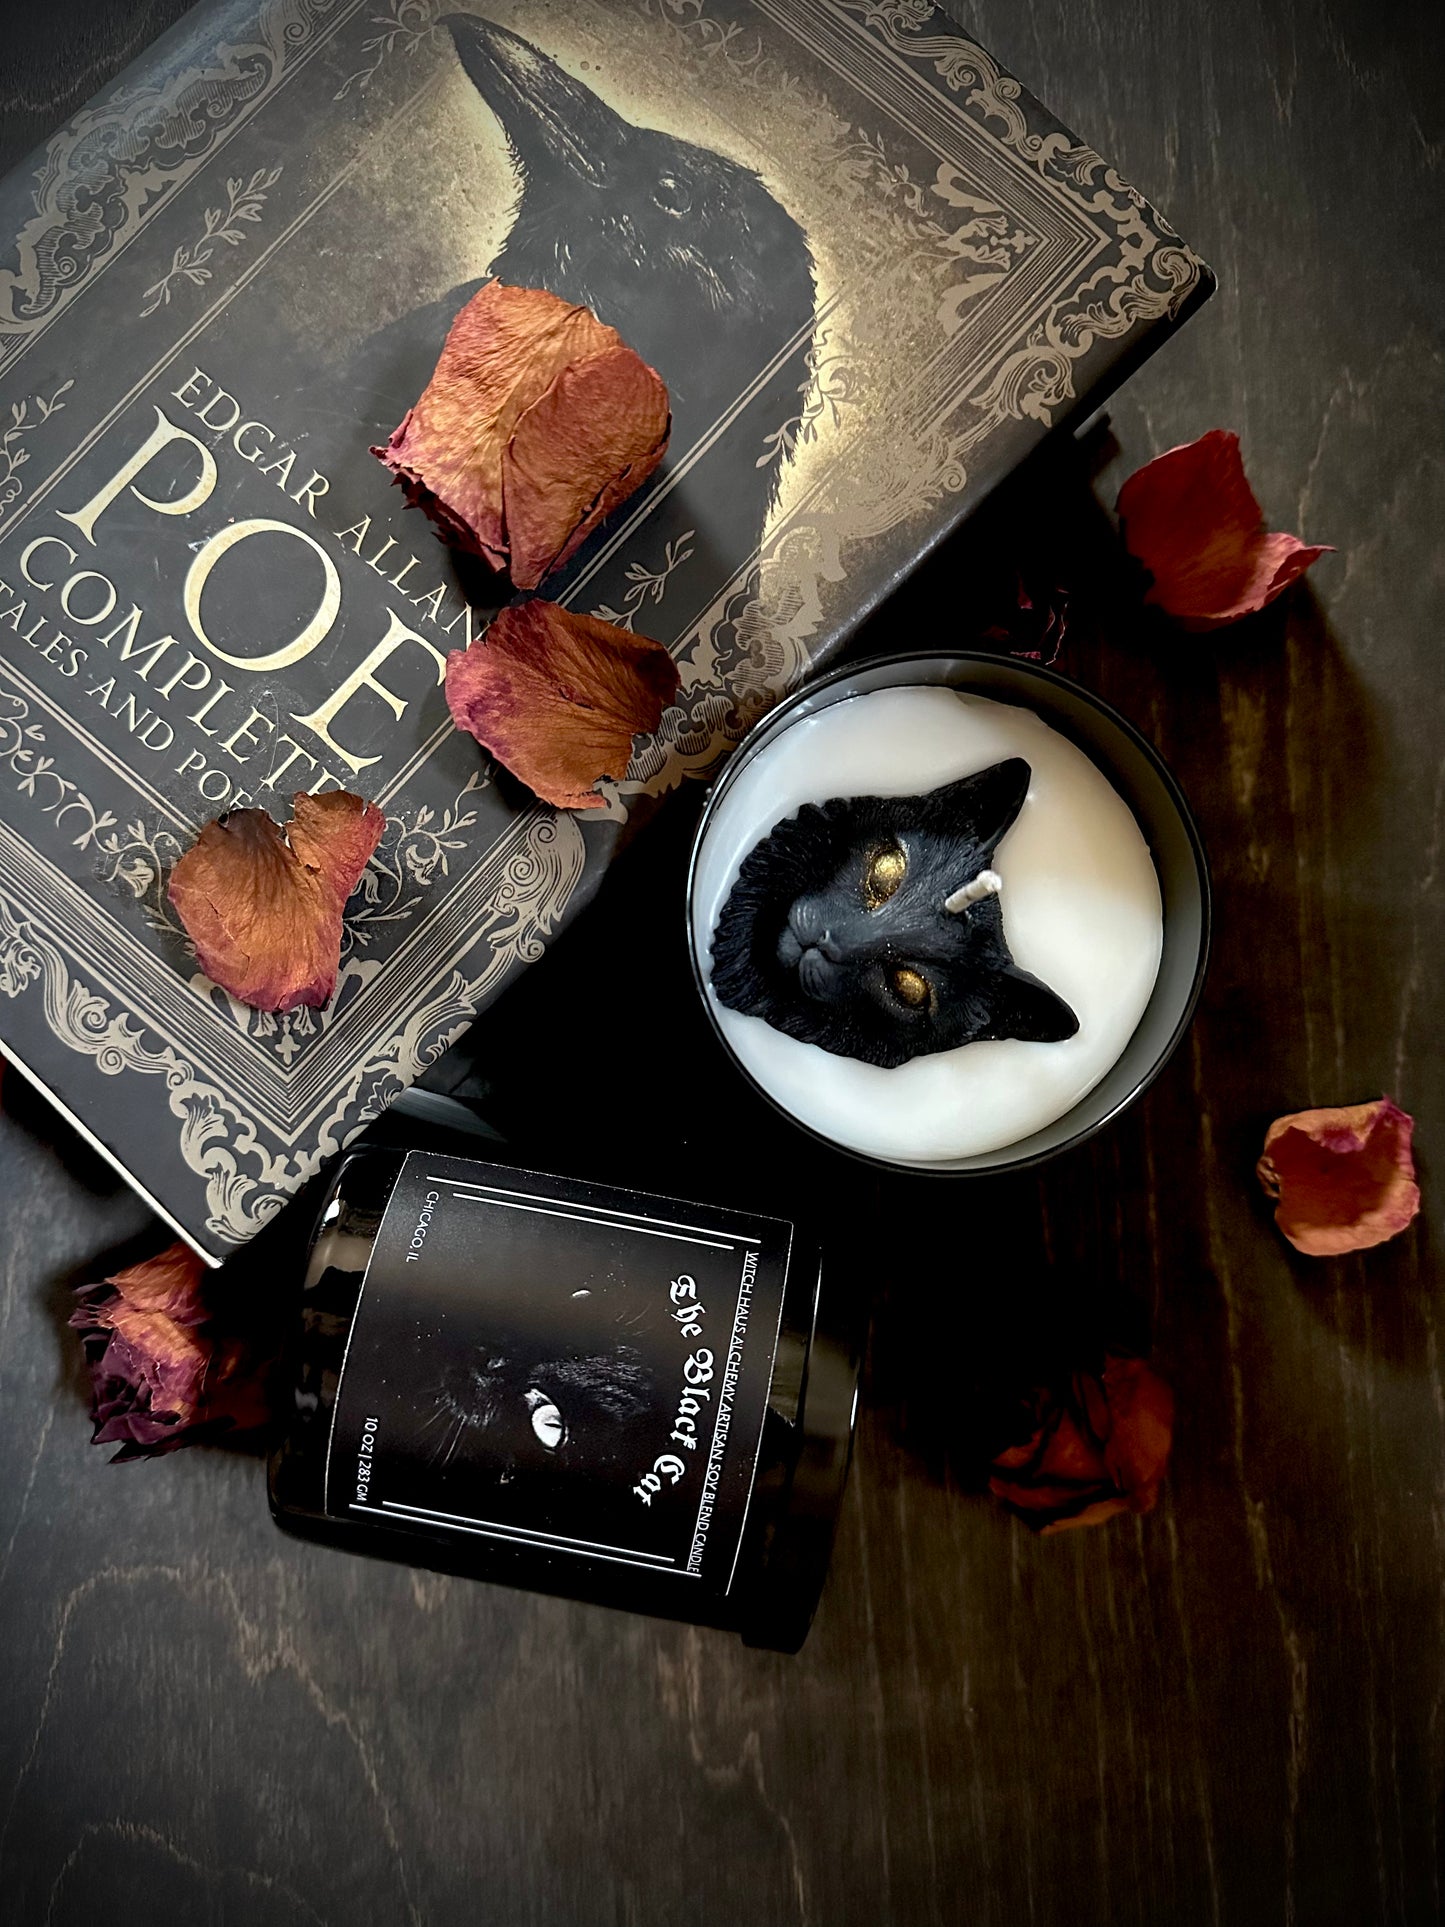 The Black Cat | 10 oz Jar Candle